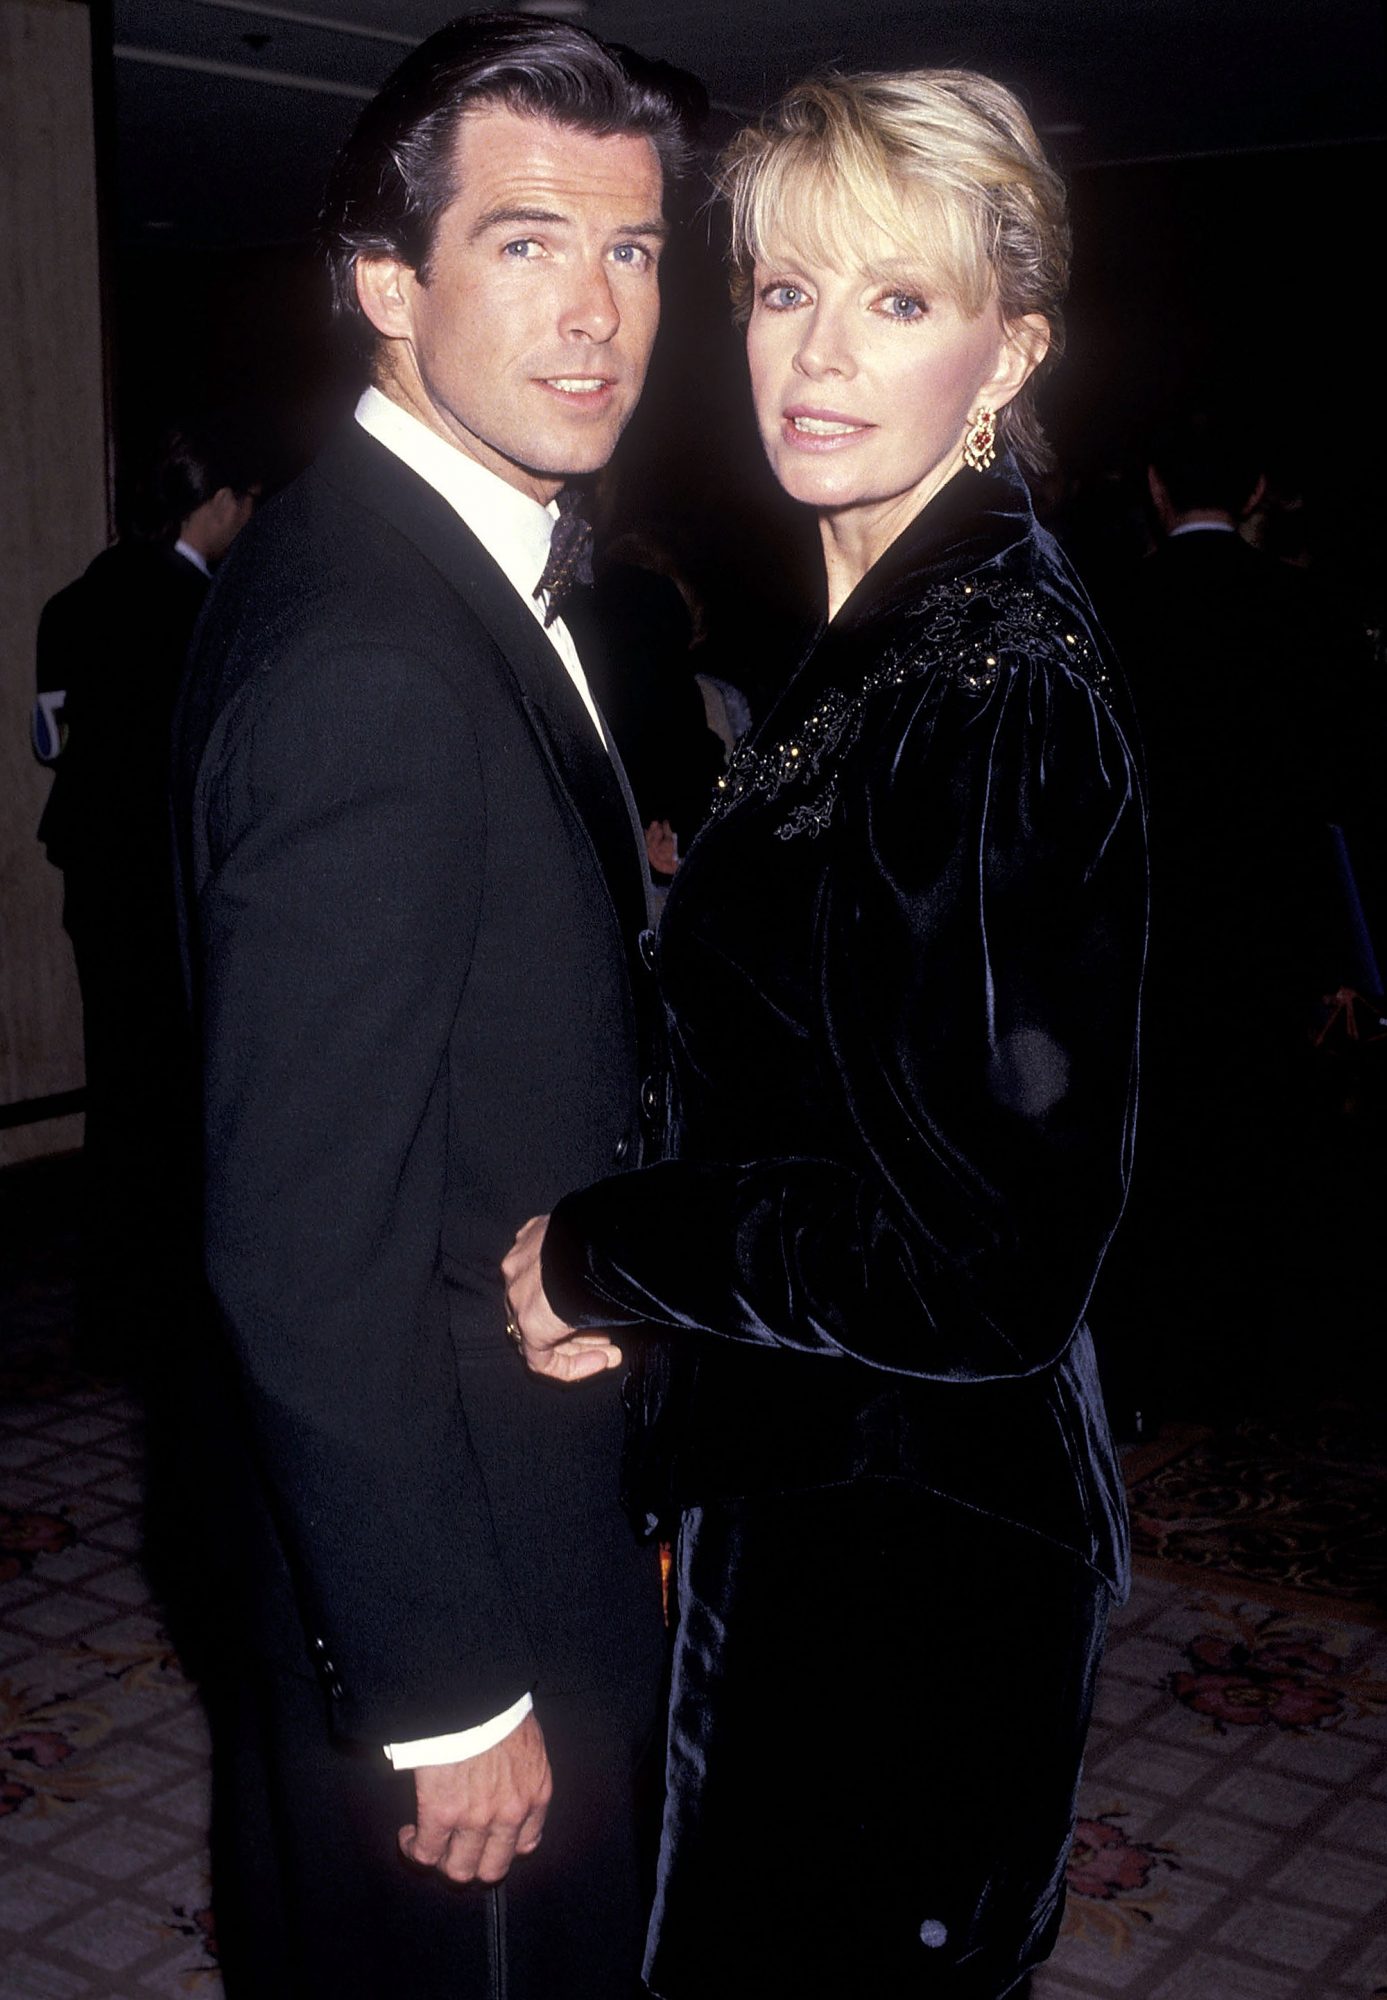 Pierce Brosnan and his first wife Cassandra Harris